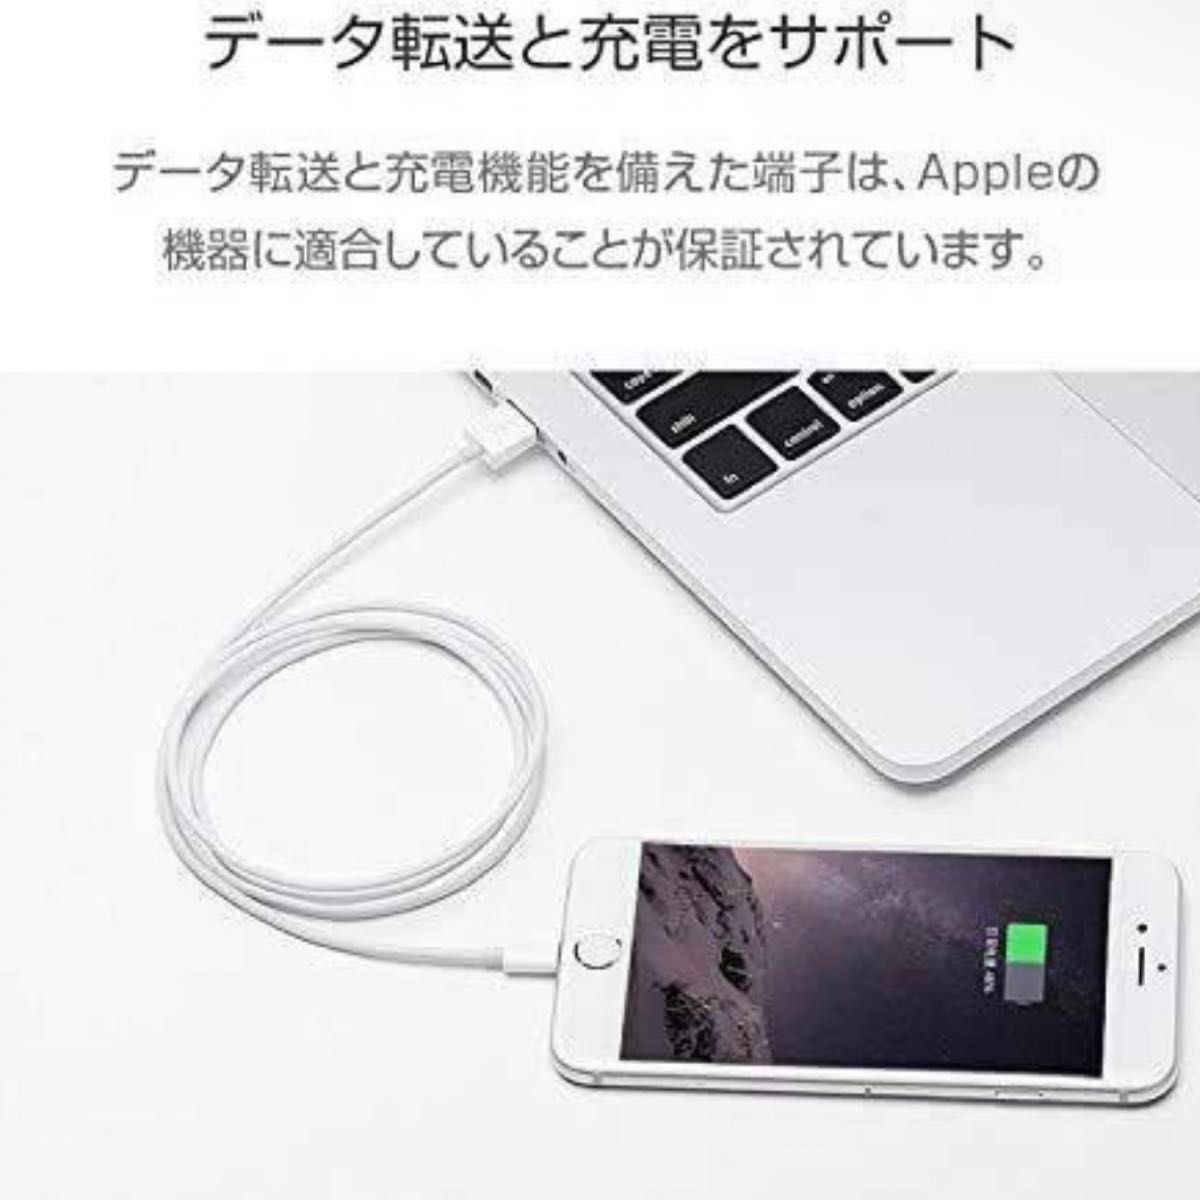 iPhone 充電器 USB ケーブル 2本セット 1m コード ライトニング ケーブル 高速データ転送 同期 高耐久 断線防止